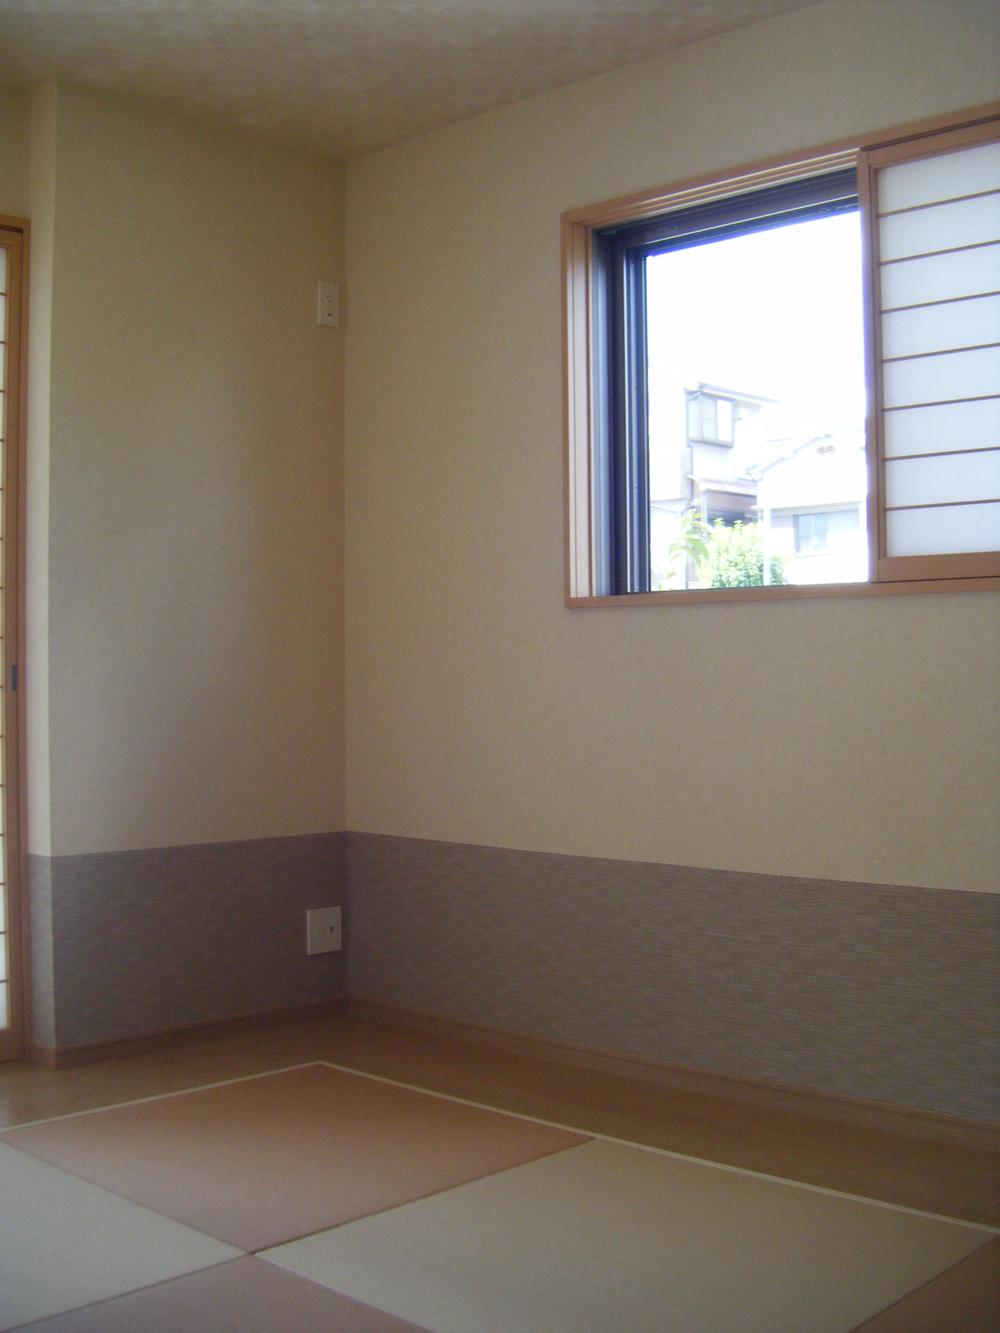 Non-living room. First floor Japanese-style room ・ Ryukyu tatami